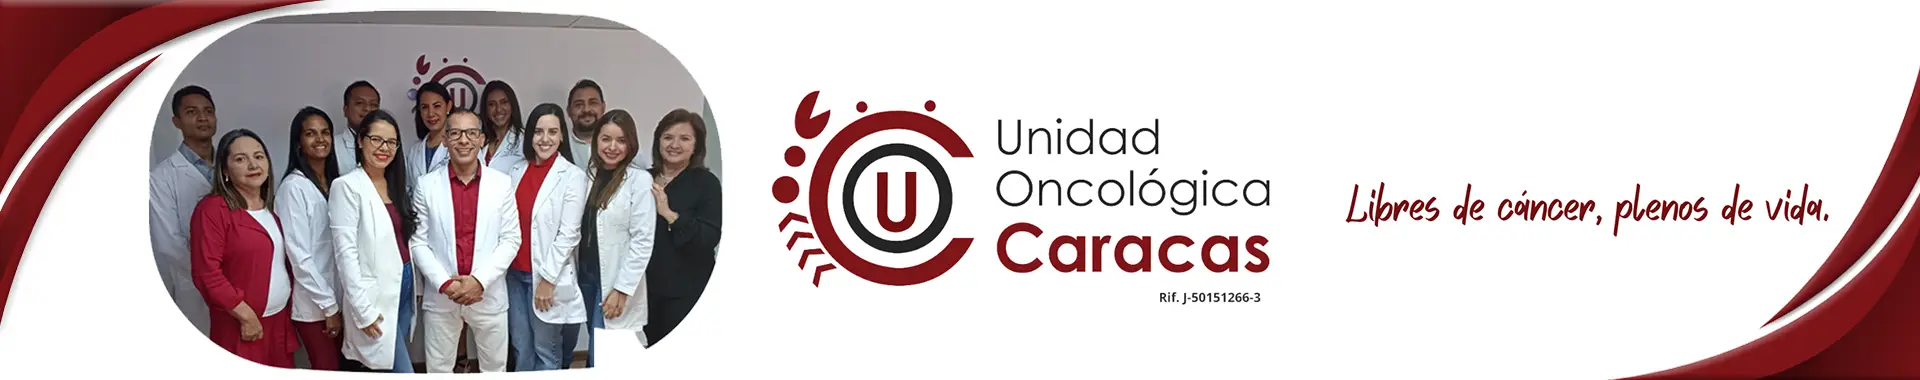 Imagen 1 del perfil de Oncocaracas